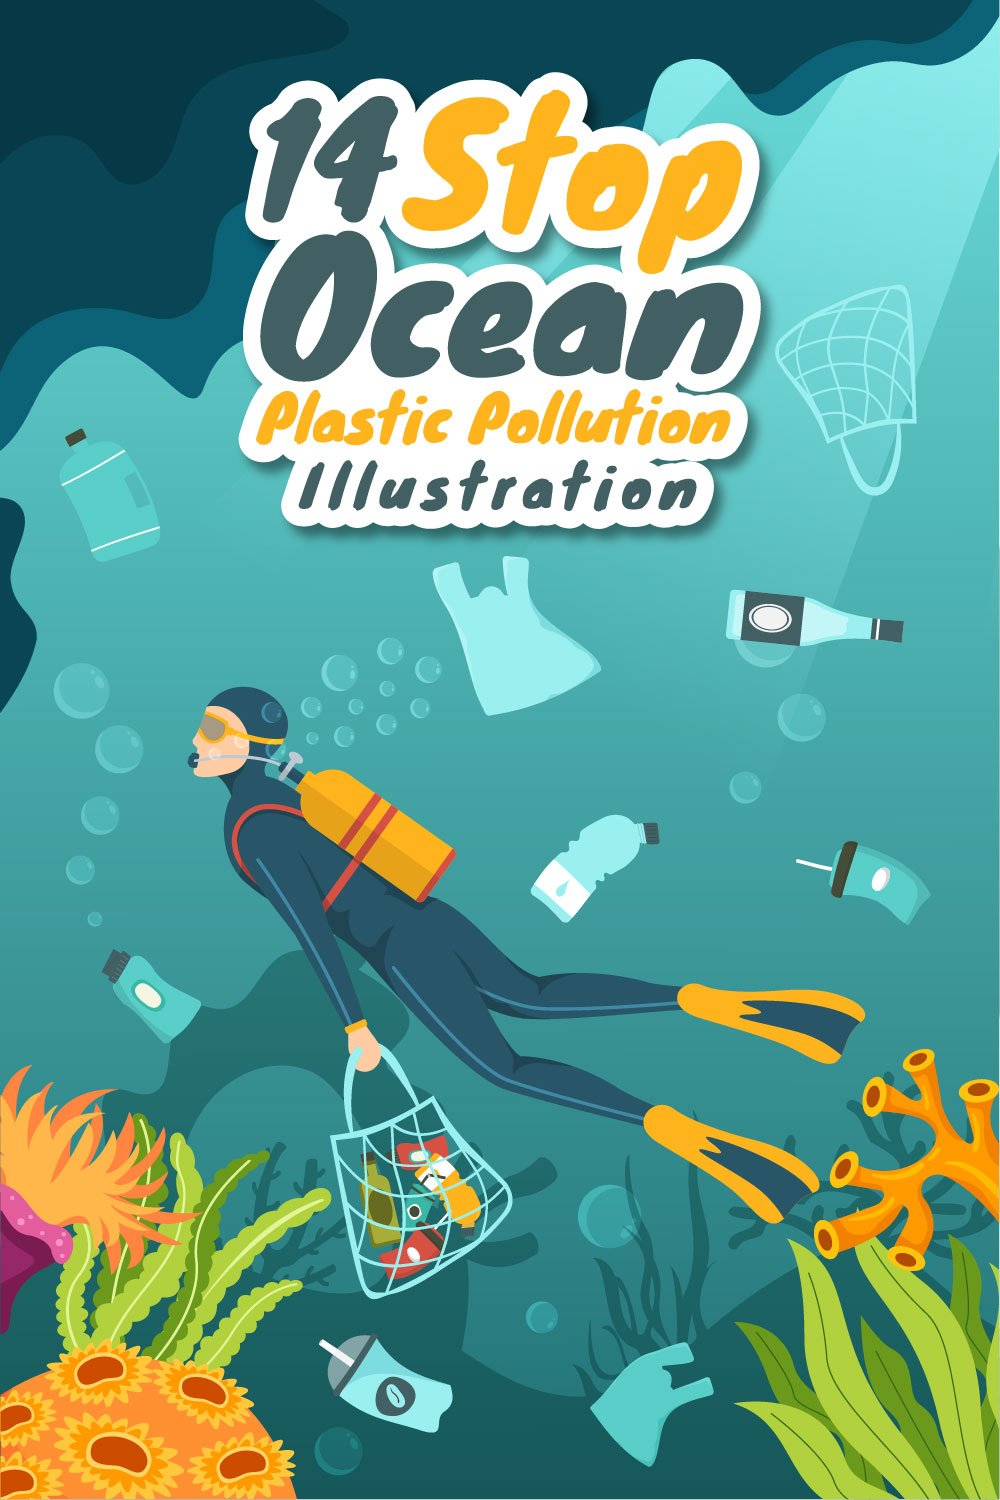 14 Stop Ocean Plastic Pollution Illustration pinterest preview image.